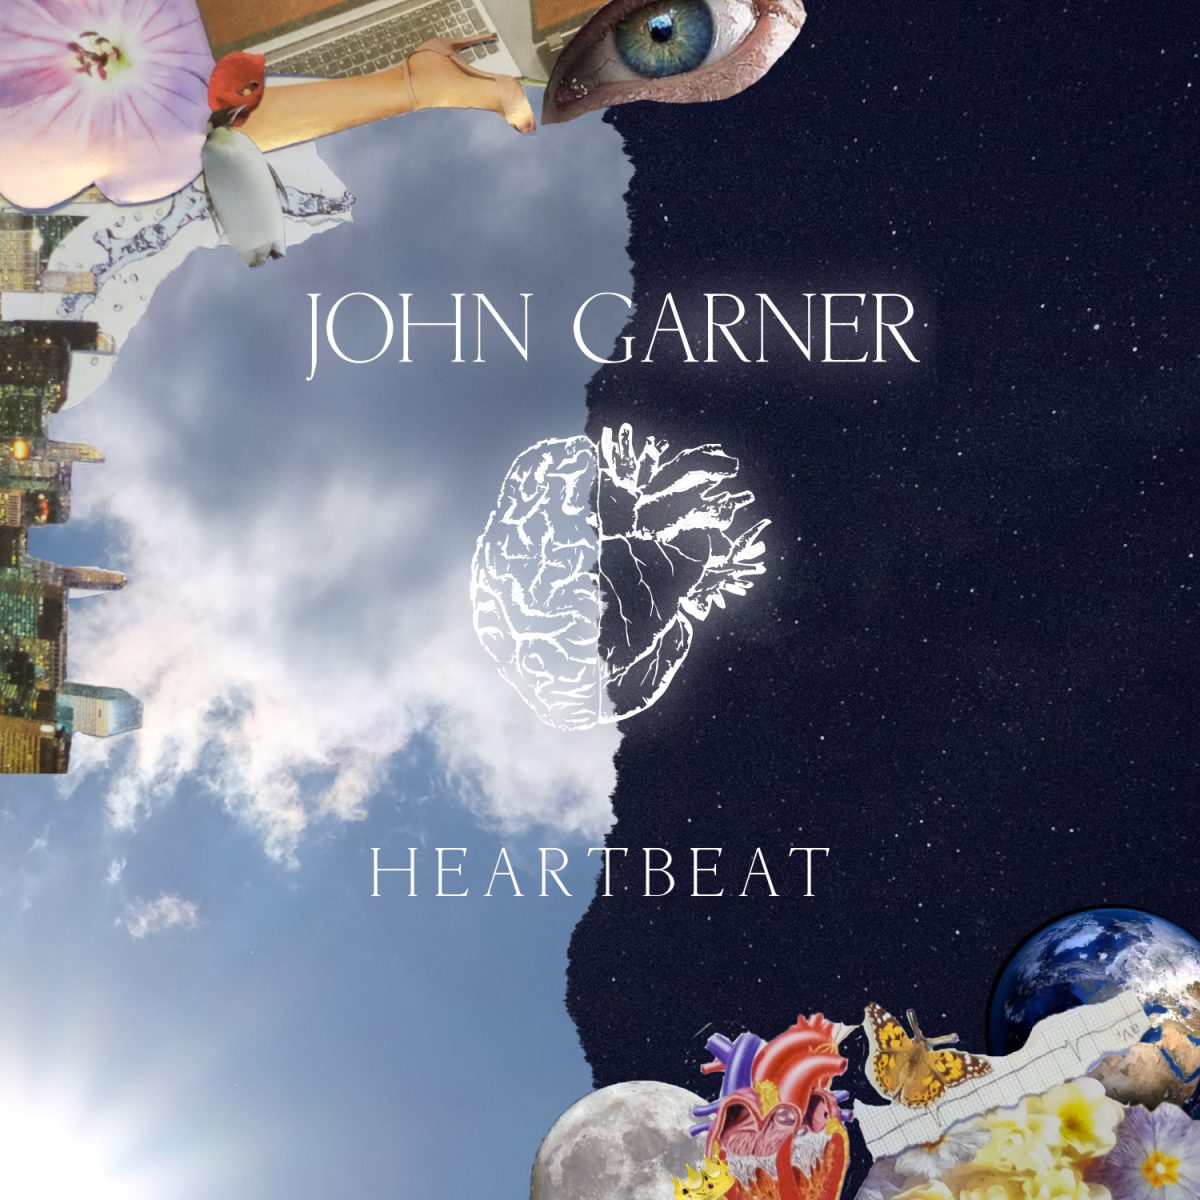 john-garner-heartbeat-album-review